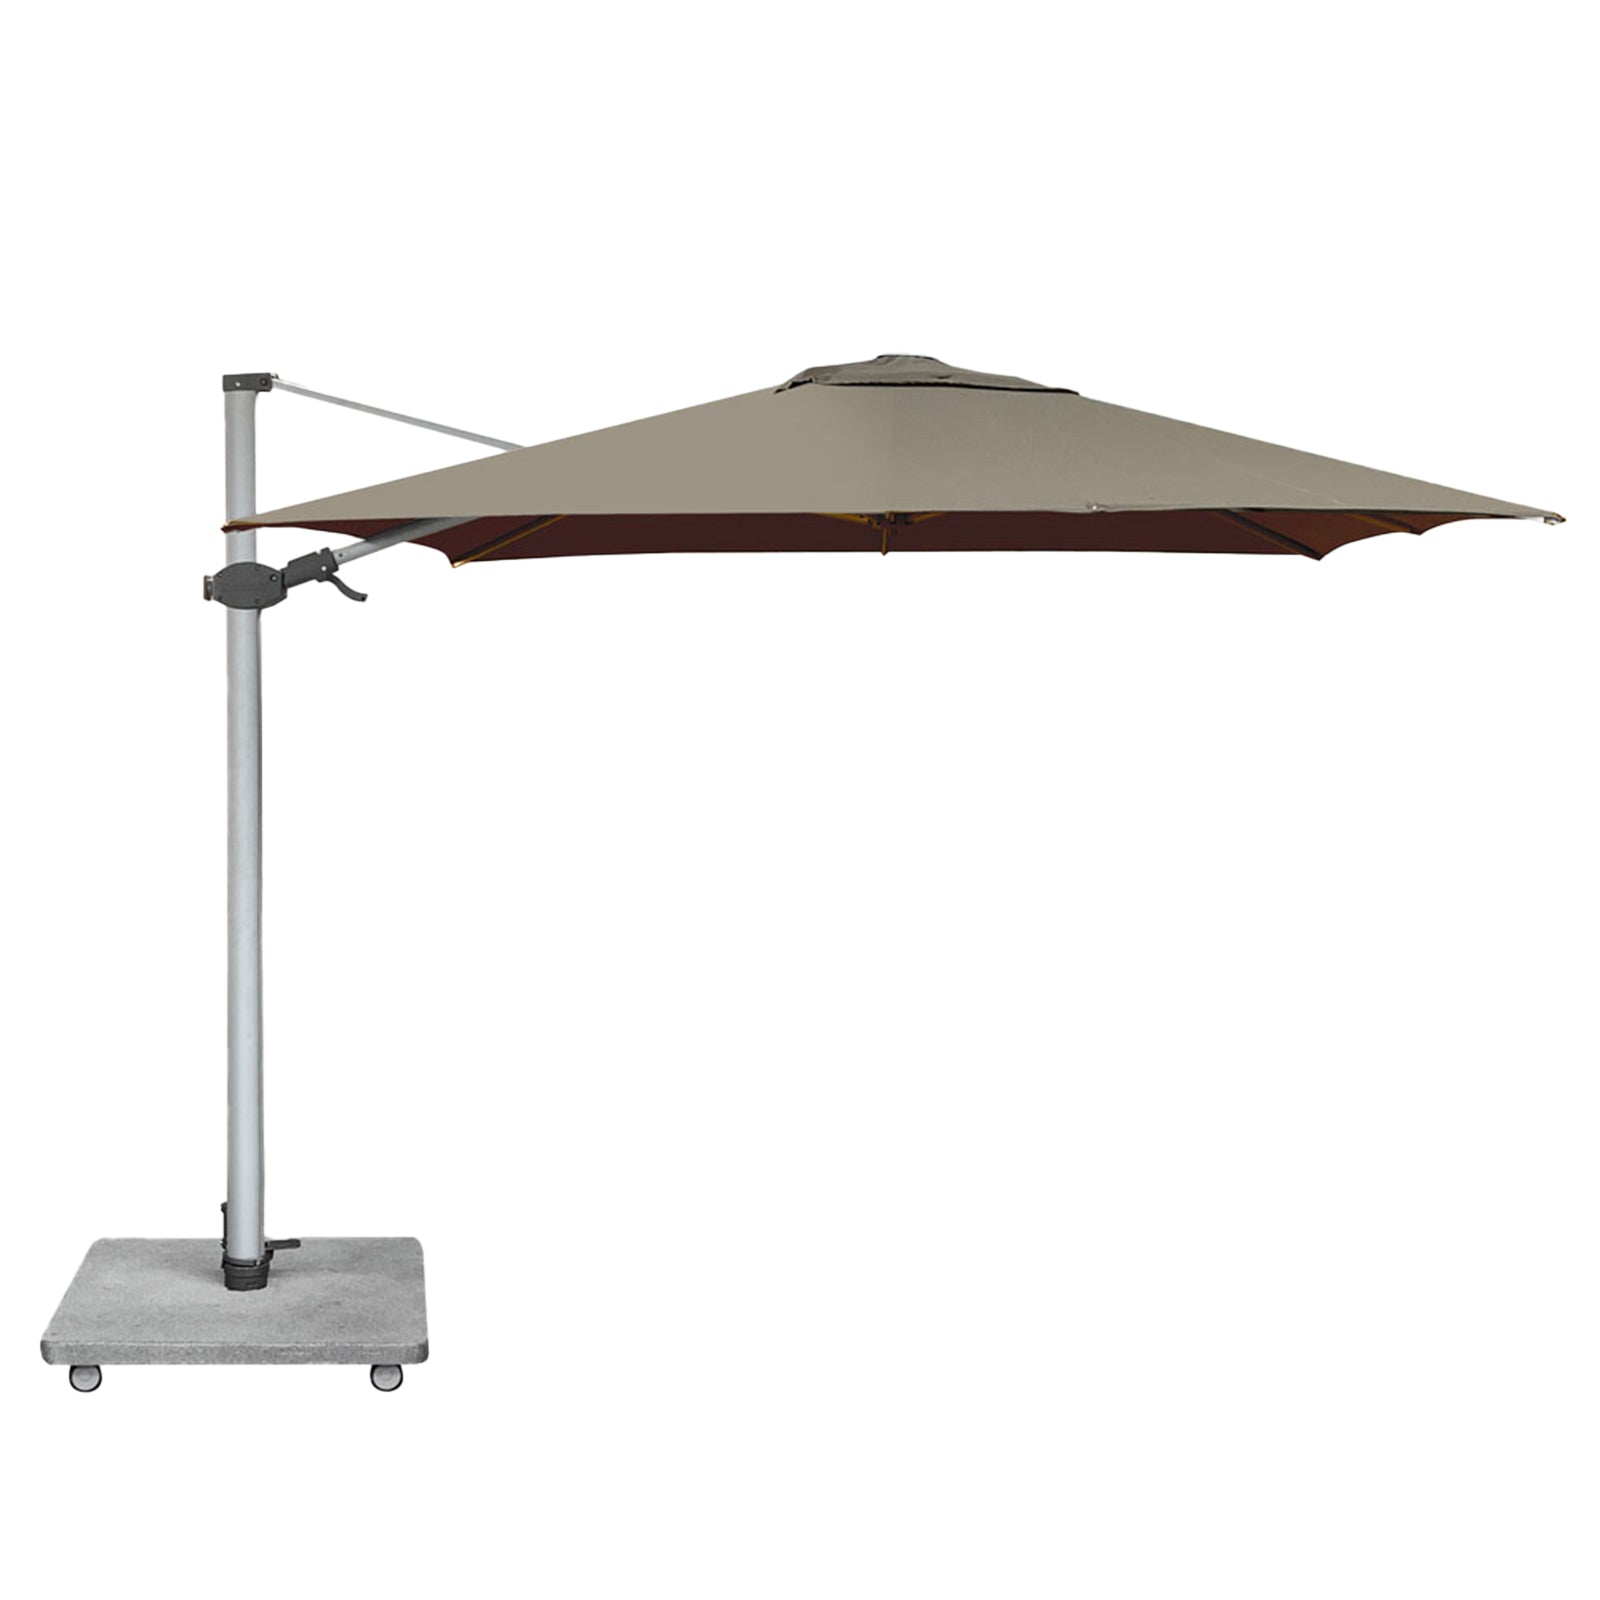 Design Warehouse Antego 3 m Square Cantilever Umbrella Taupe 127148